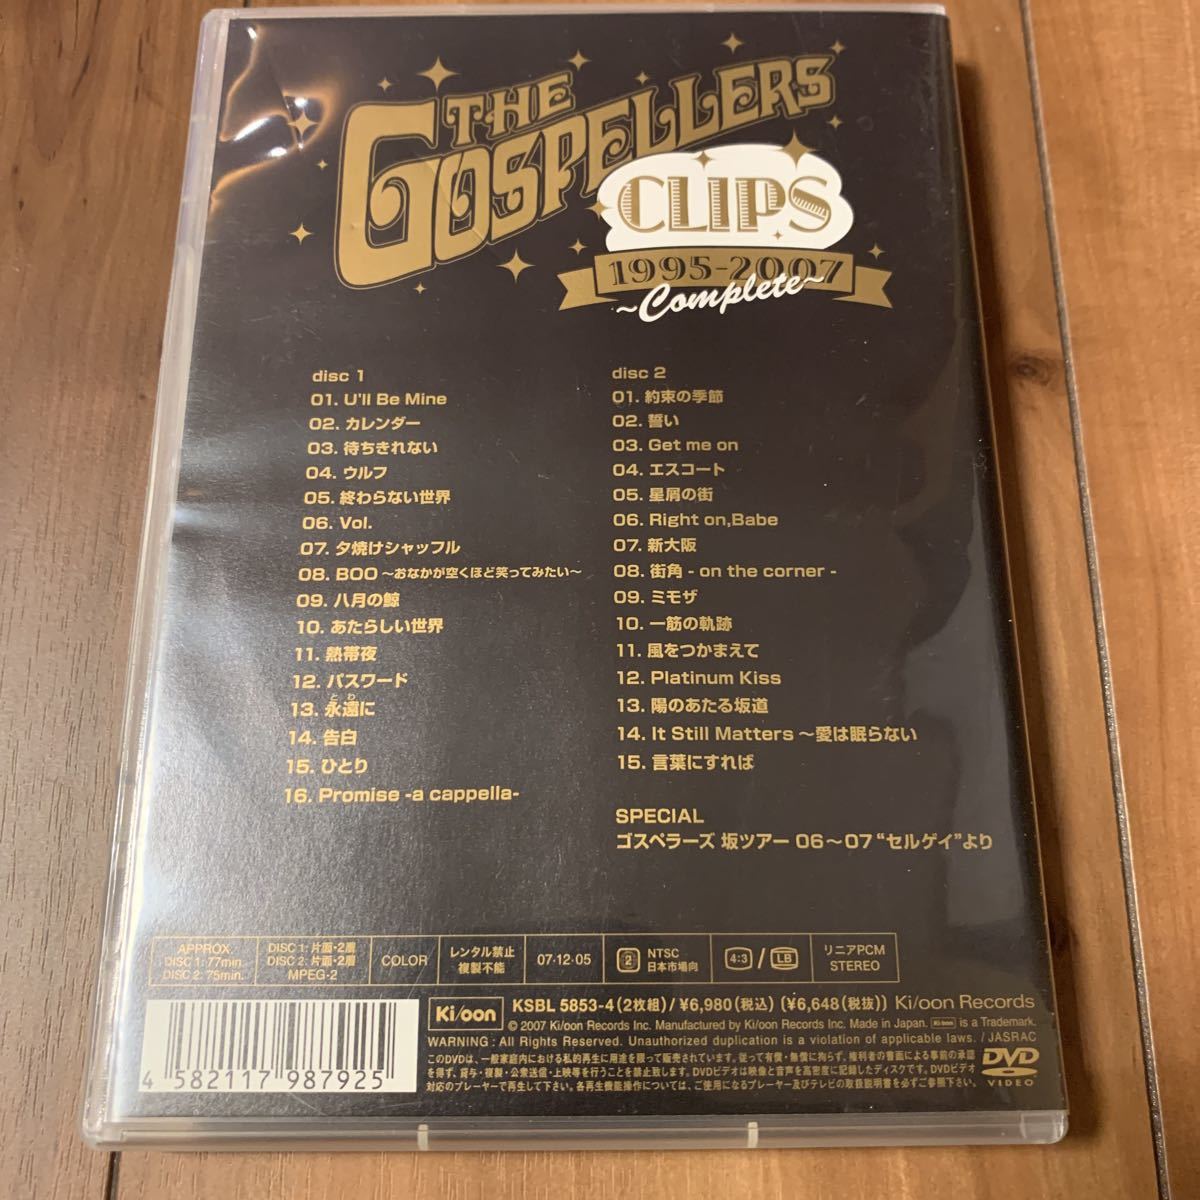 THE GOSPELLERS Goss винт -zCLIPS 1995-2007 Complete DVD PV сборник 